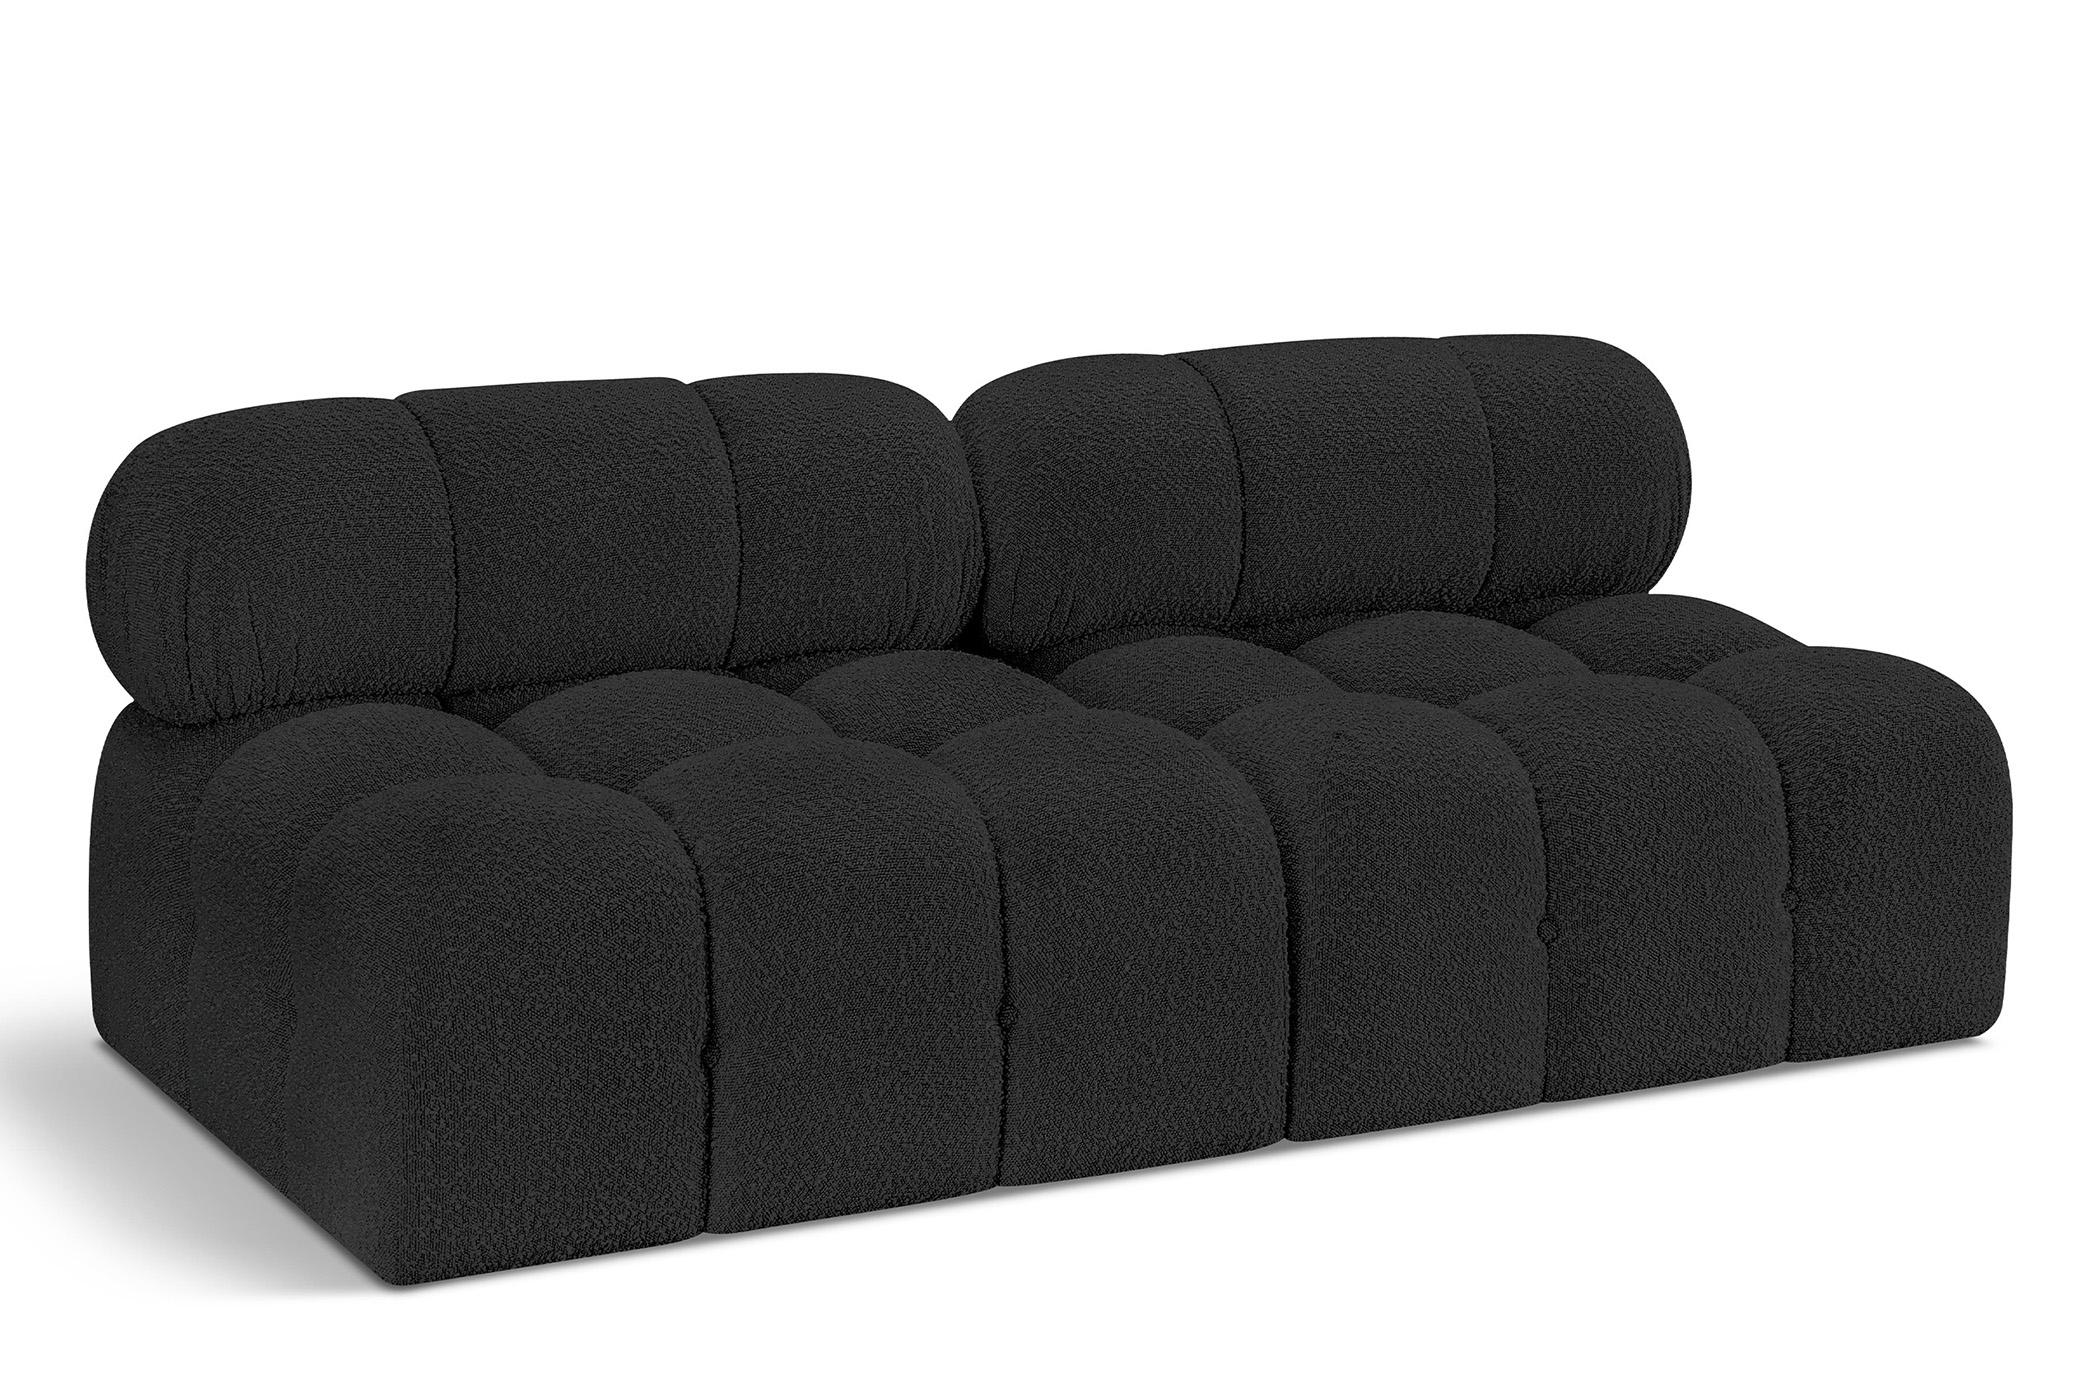 Contemporary, Modern Modular Sofa AMES 611Black-S68B 611Black-S68B in Black 